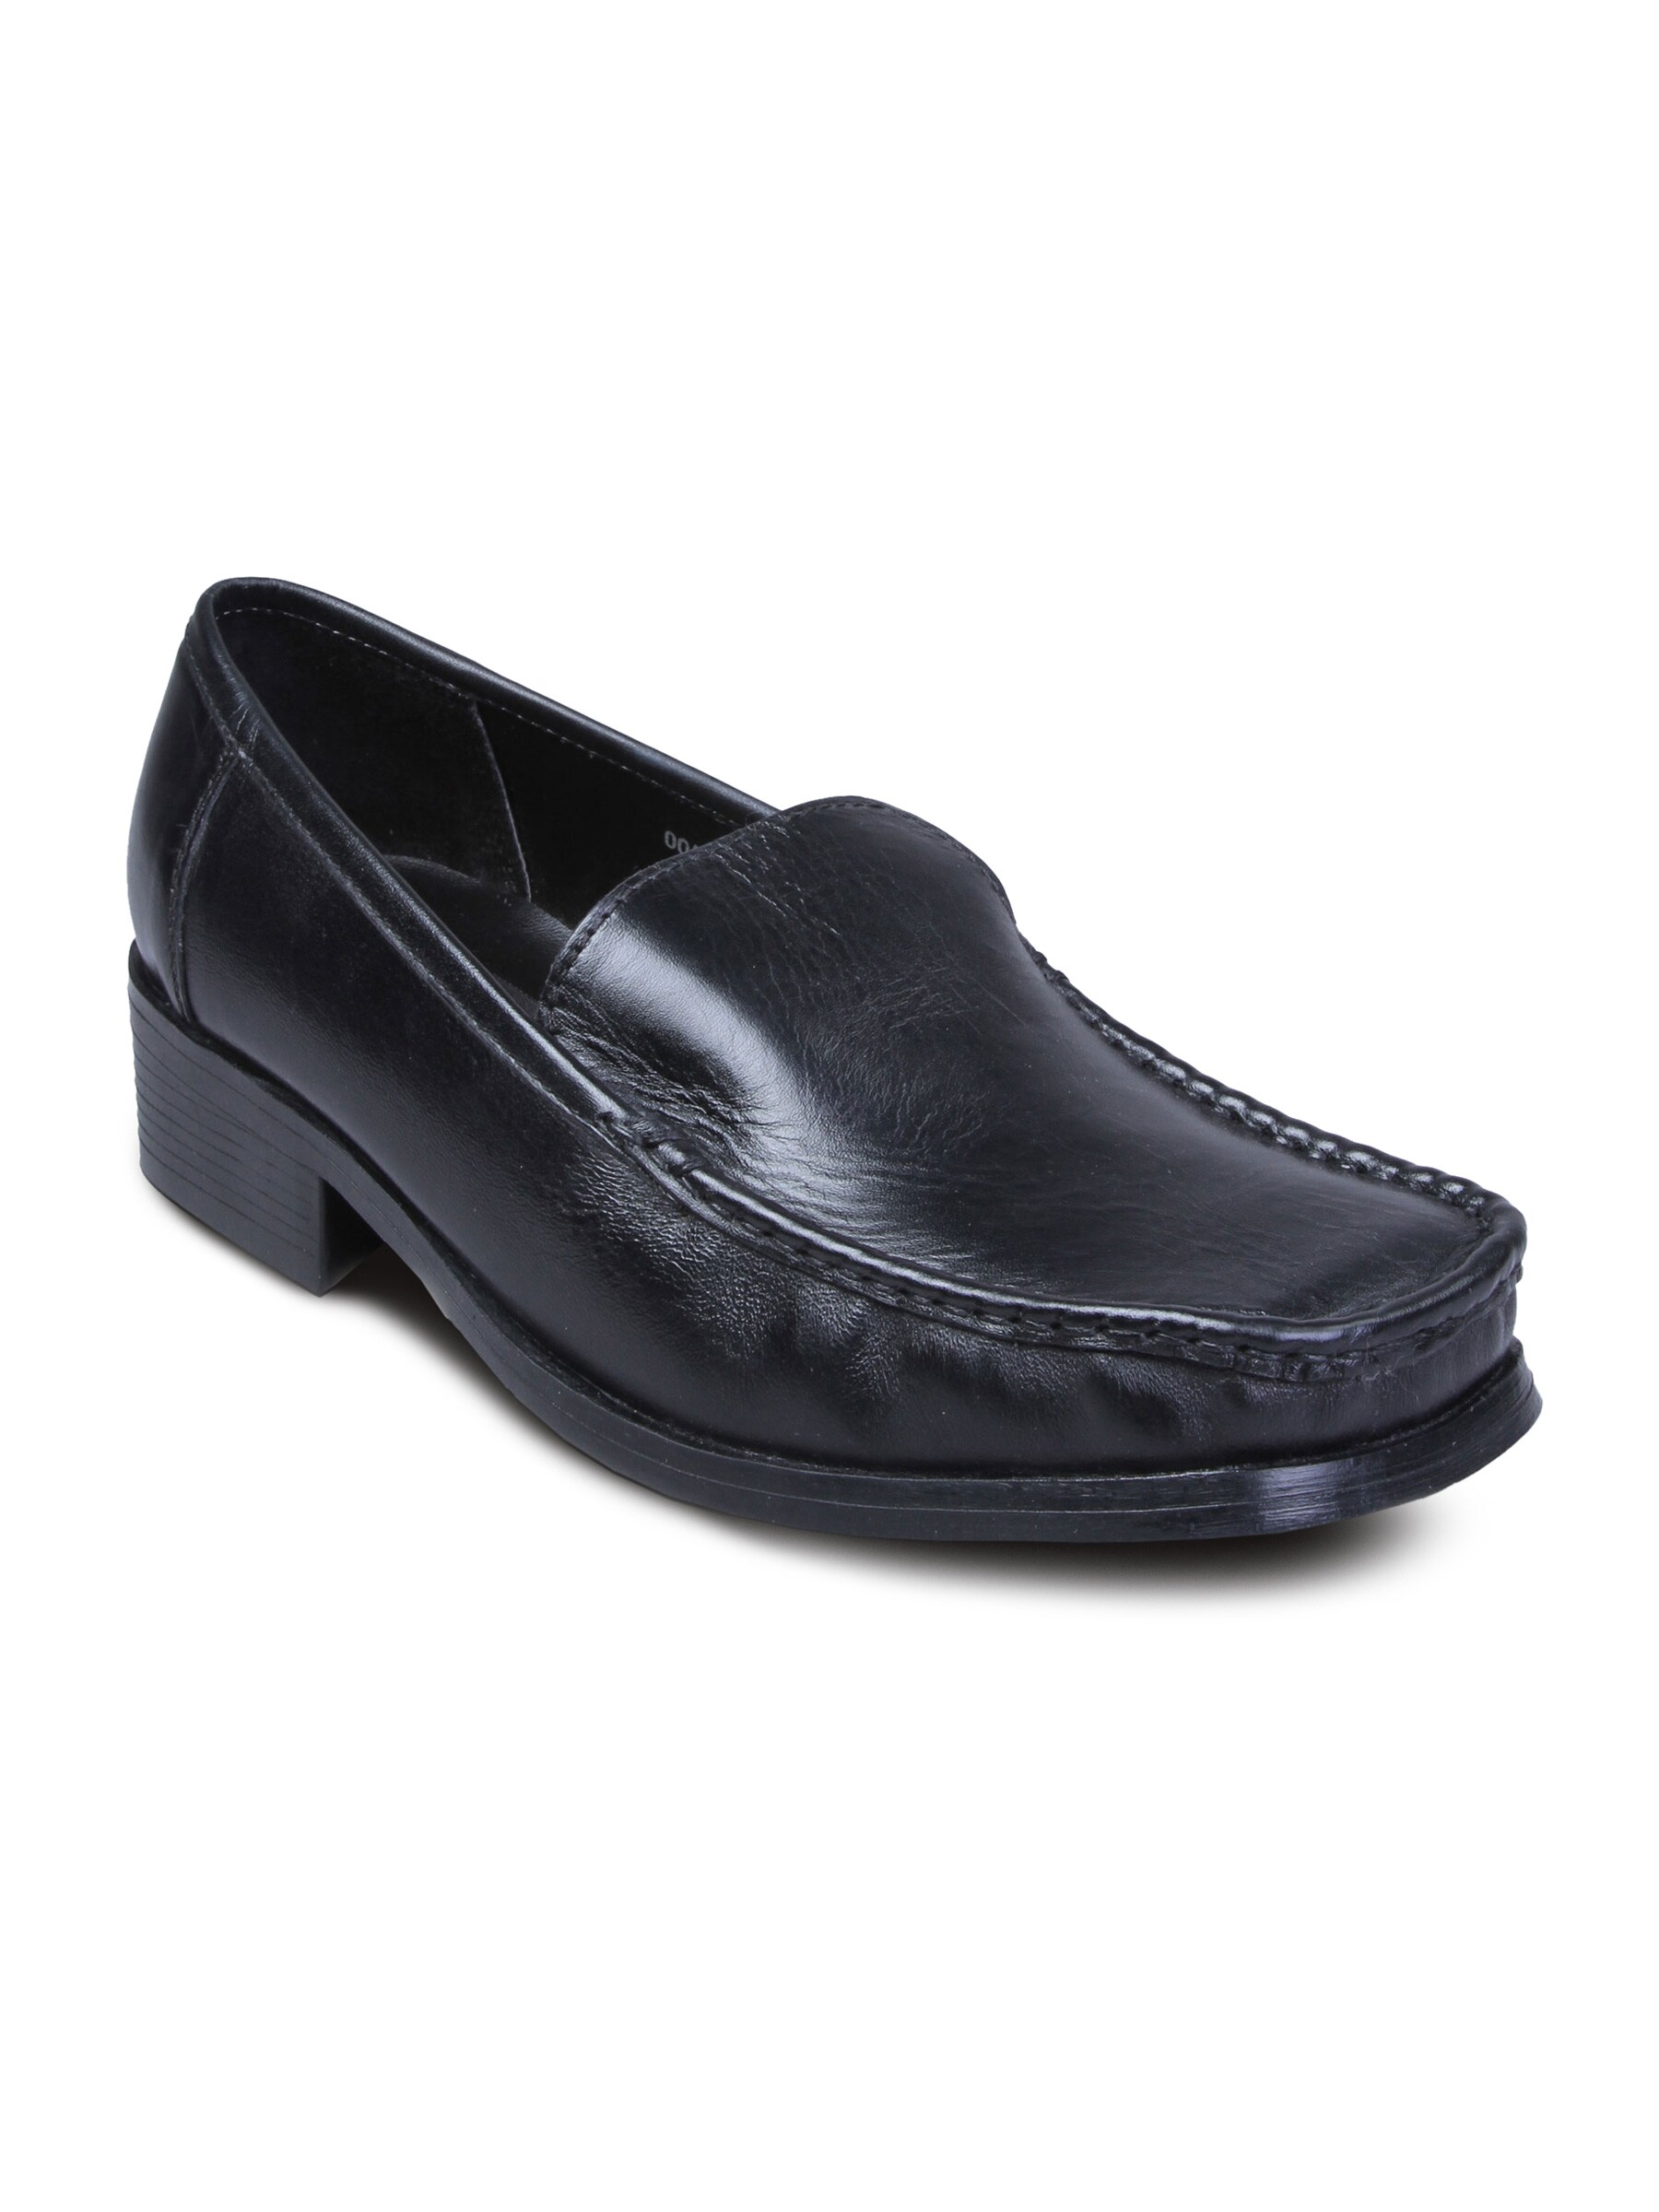 Carlton London Men Black Leather Casual Shoes.